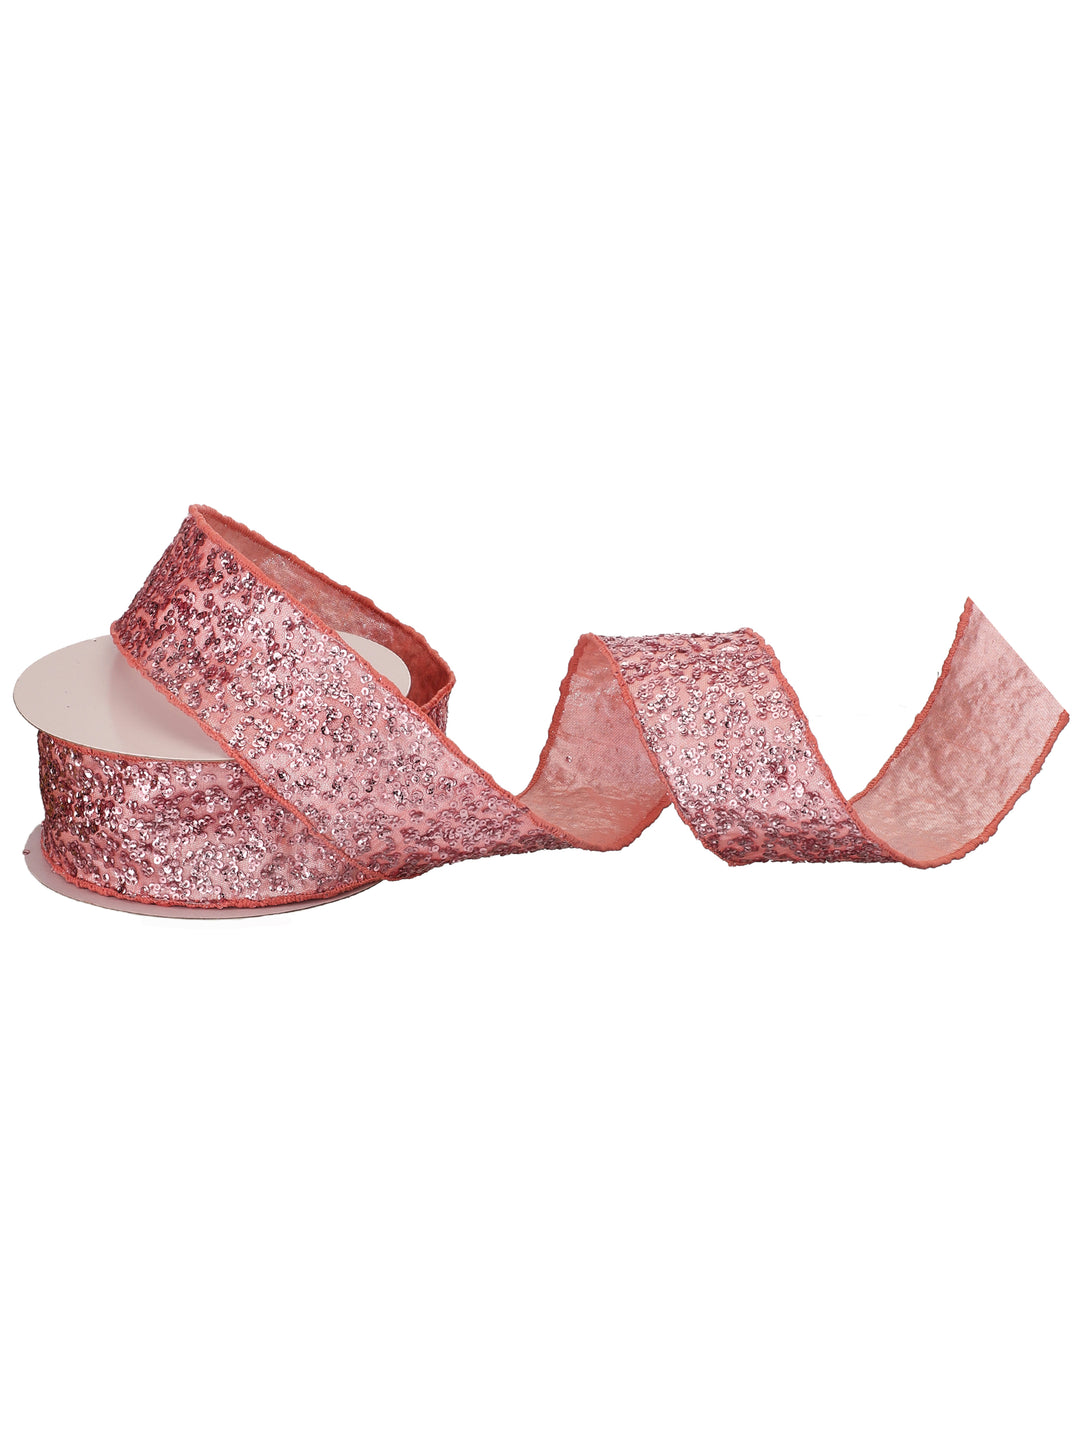 Regency 2.5" x 10 YD Pink Metallic Sequin Grosgrain Wired Ribbon